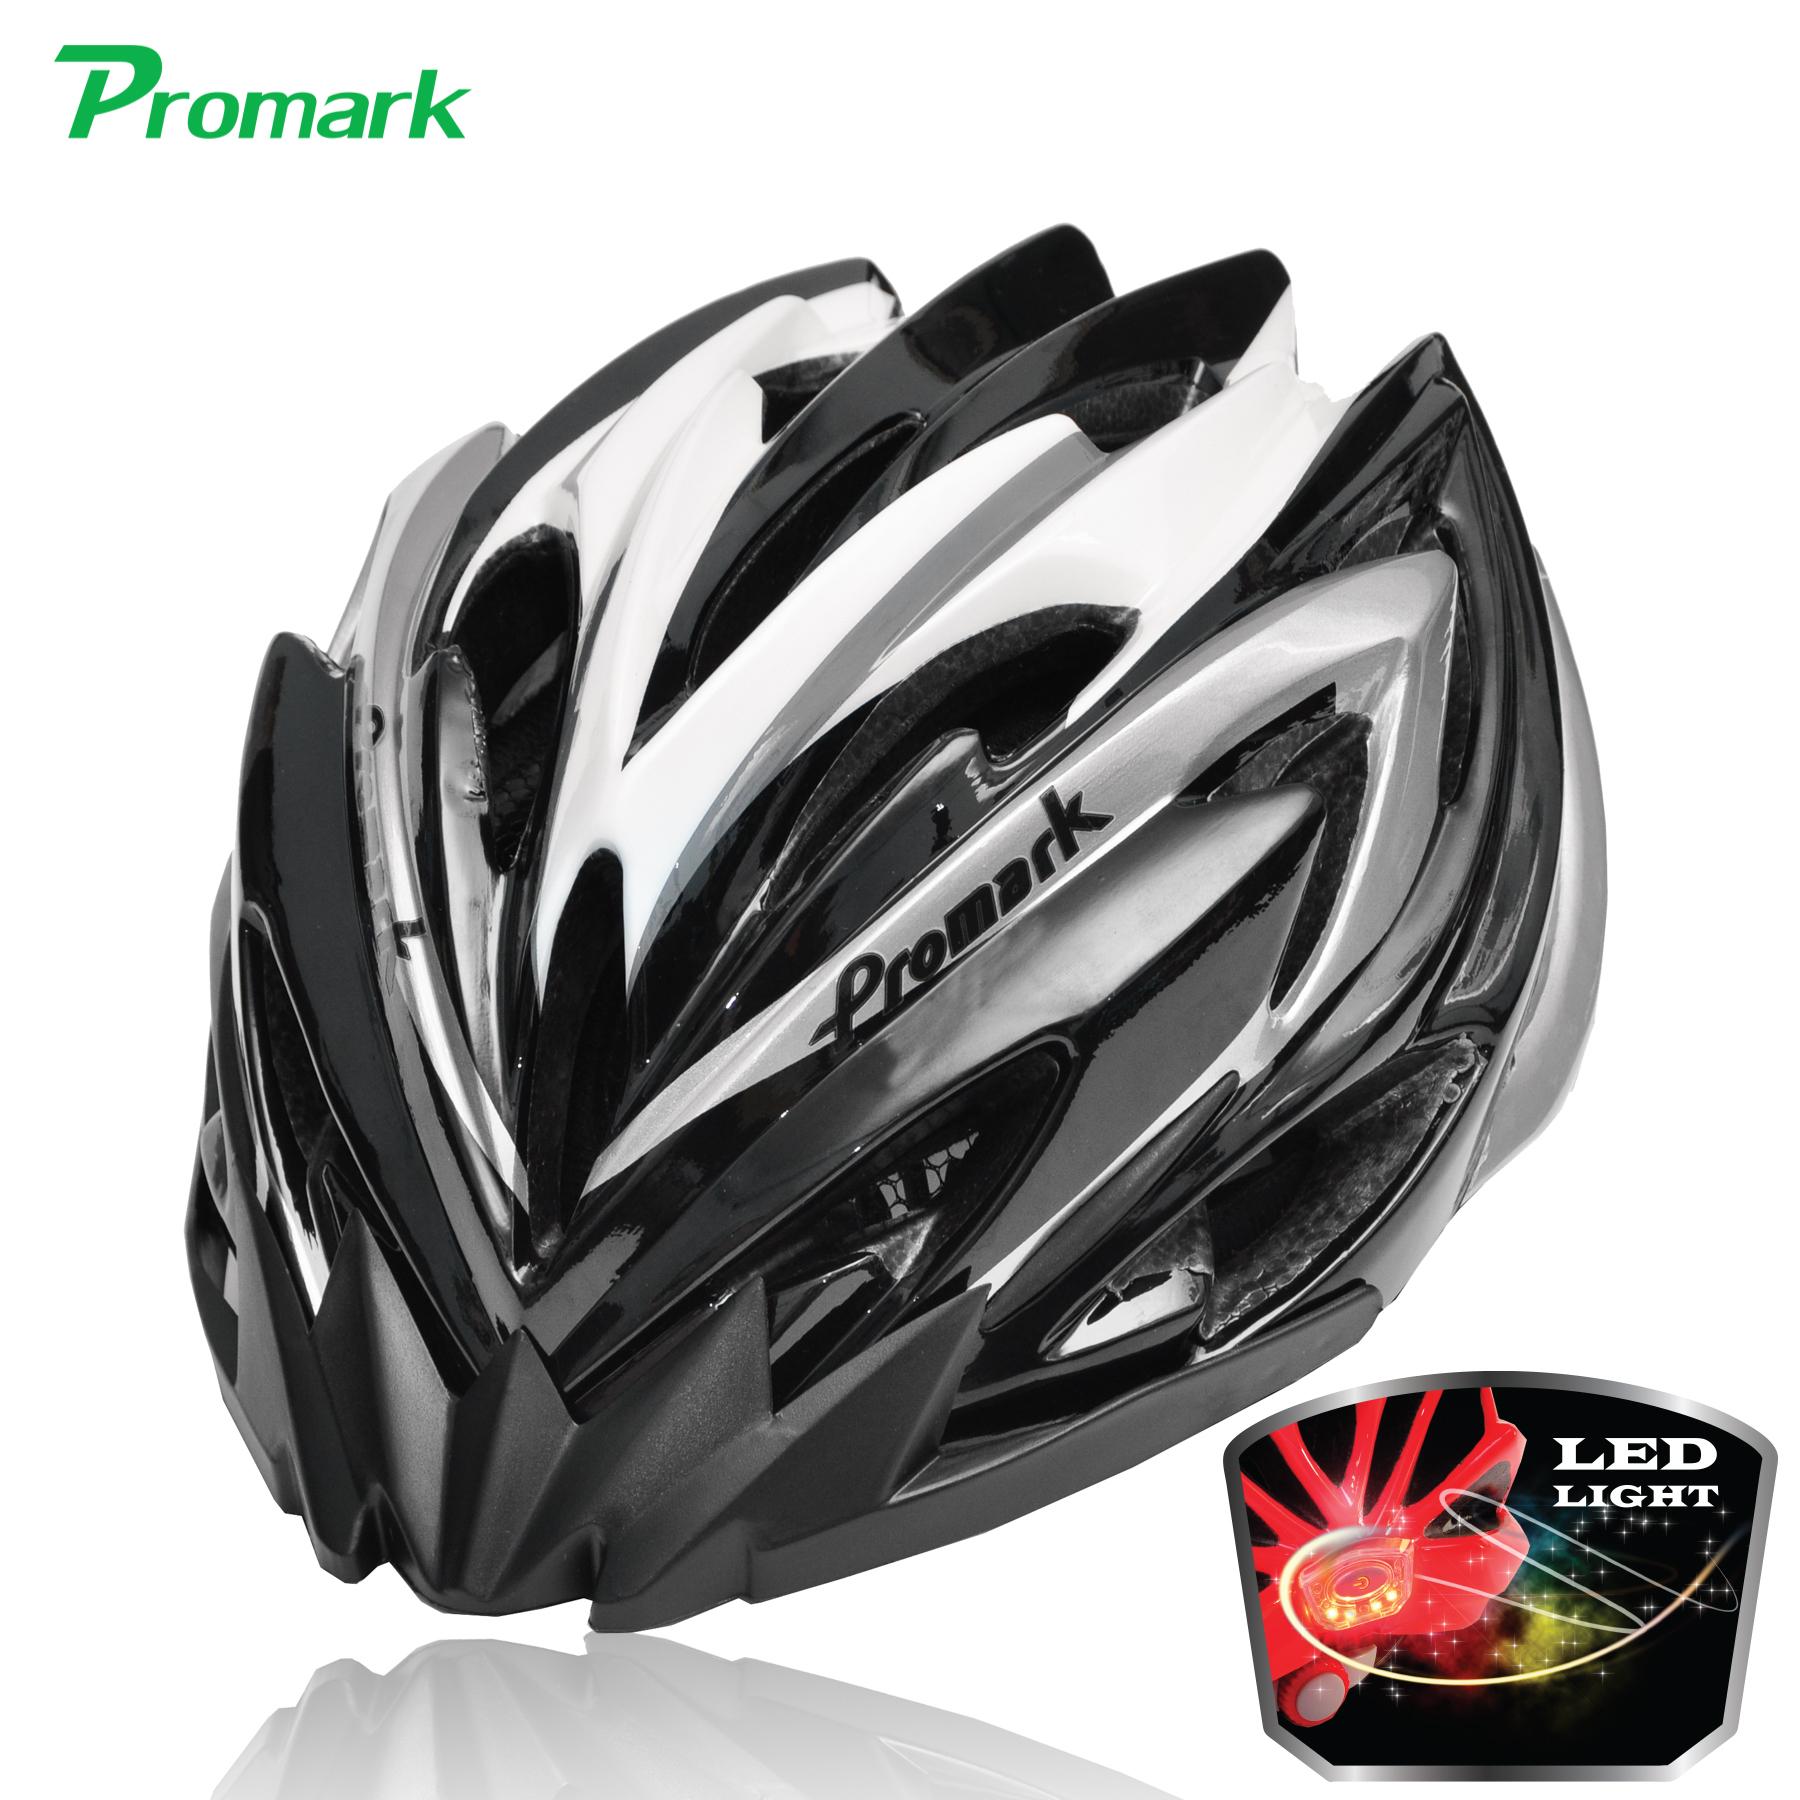 Promark หมวกปั่นจักรยานมีไฟ Premium LED Lights Cycle Helmet, EPS Foam, Adjustable Size